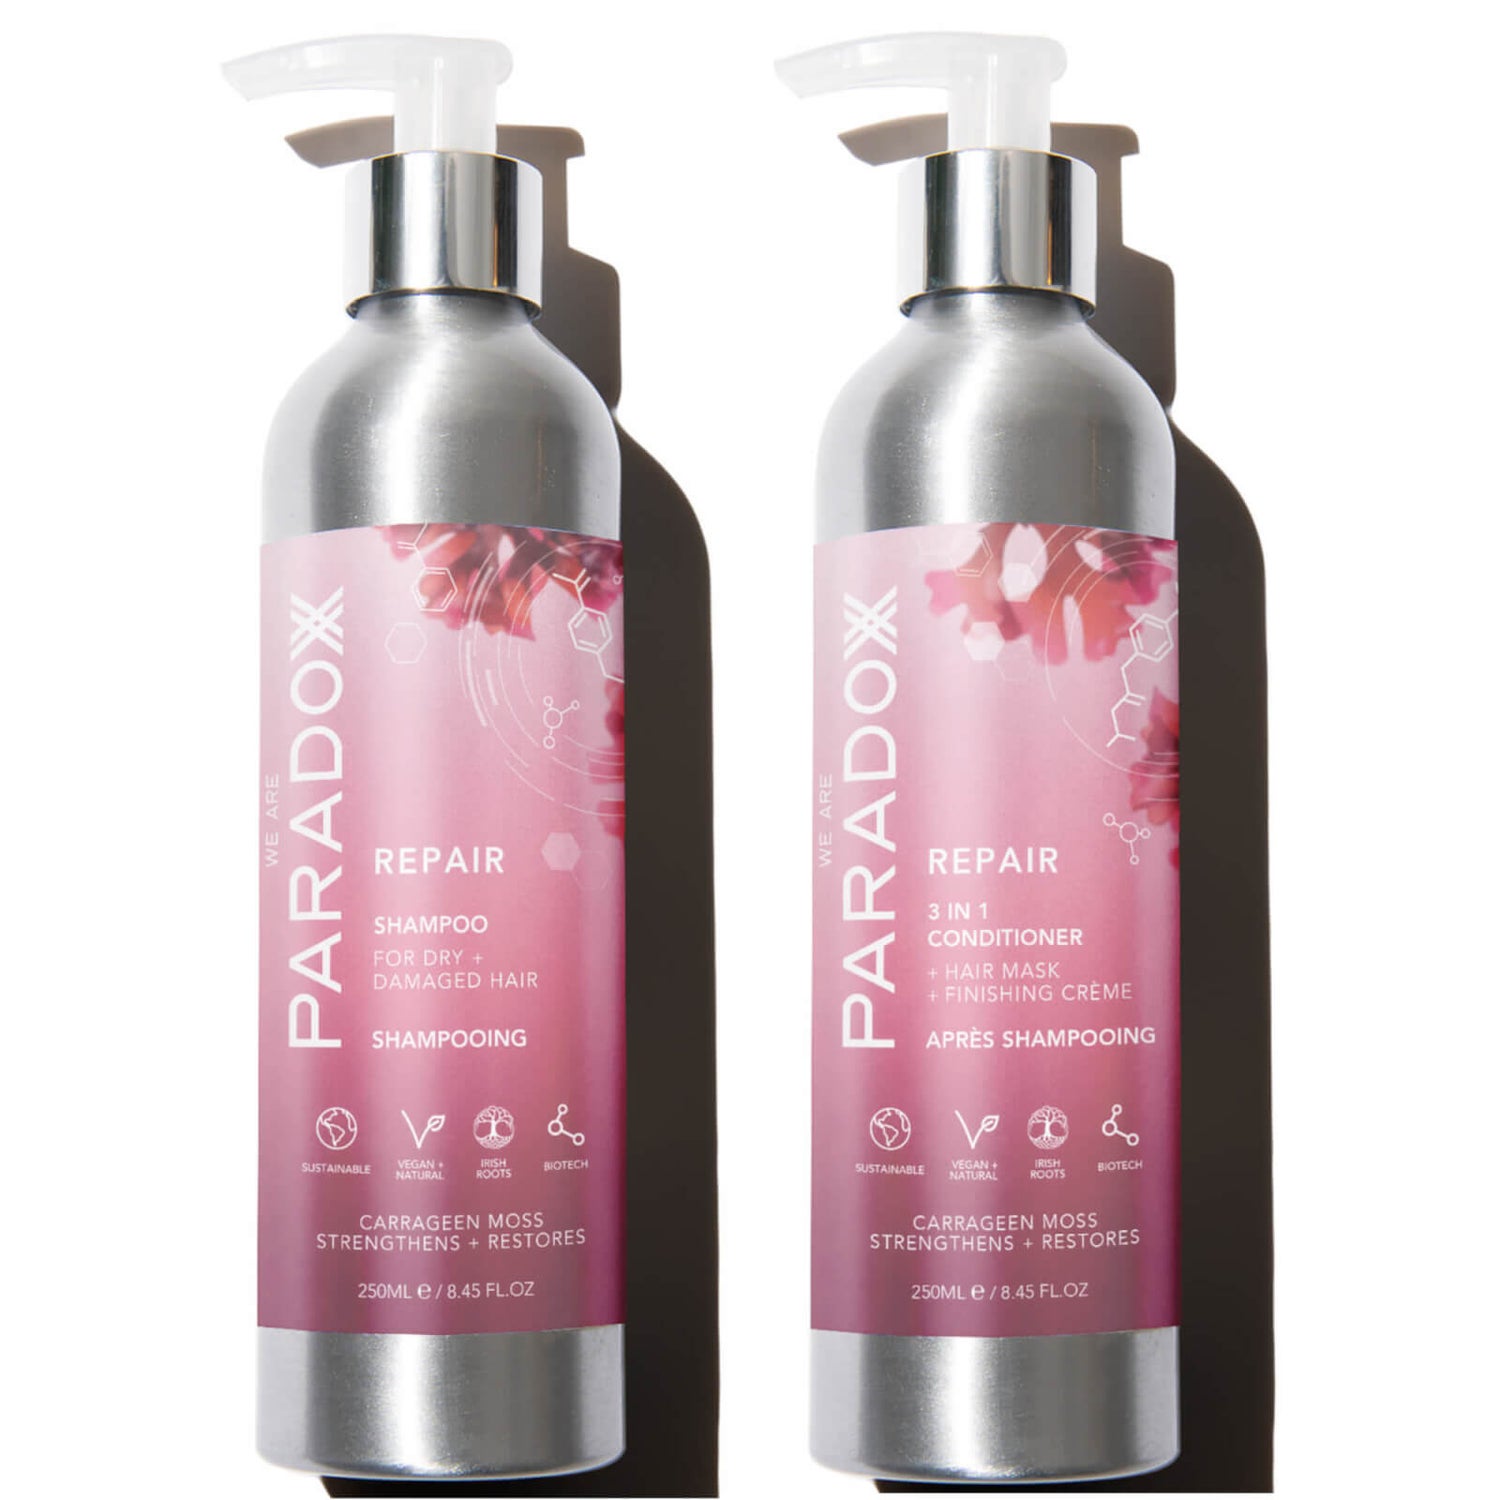 We Are Paradoxx Repair Shampoo and Conditioner Bundle